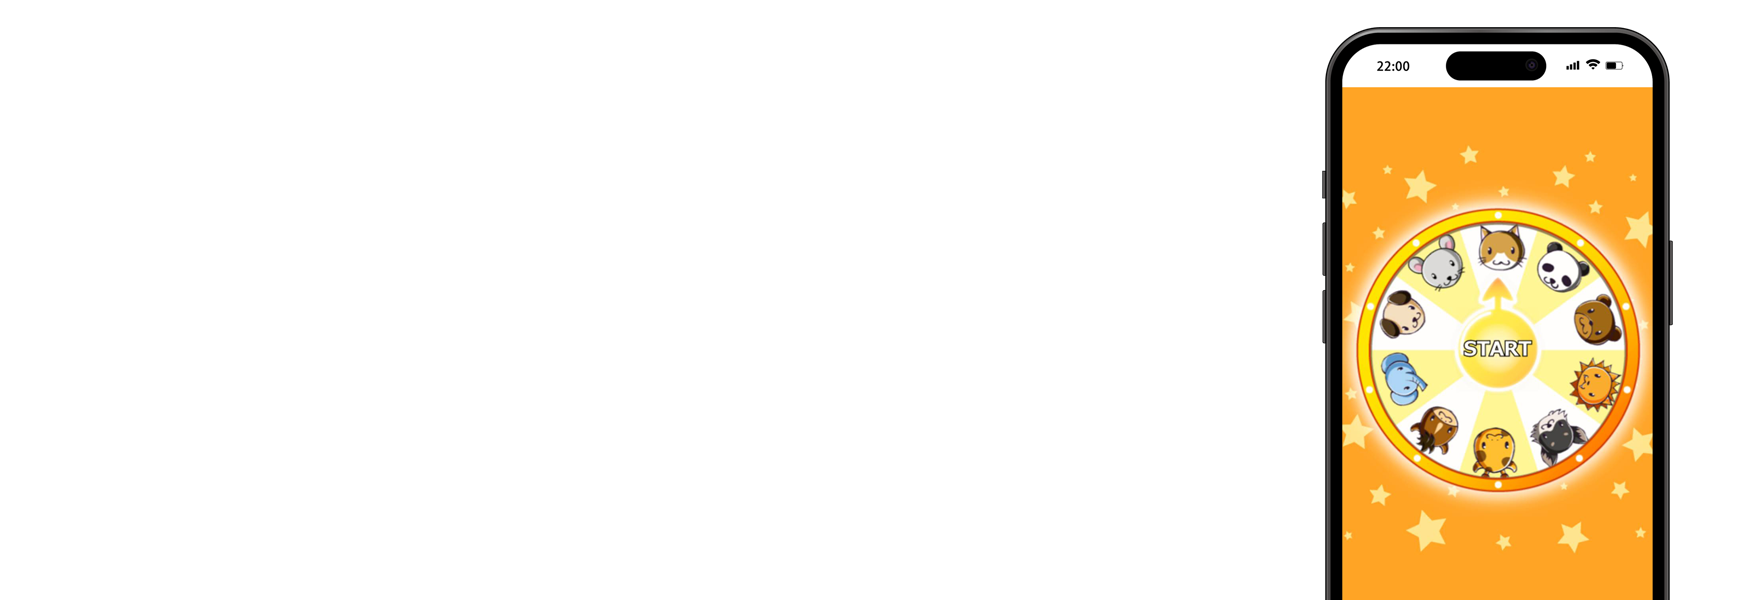 Web抽選システム-begame.jp